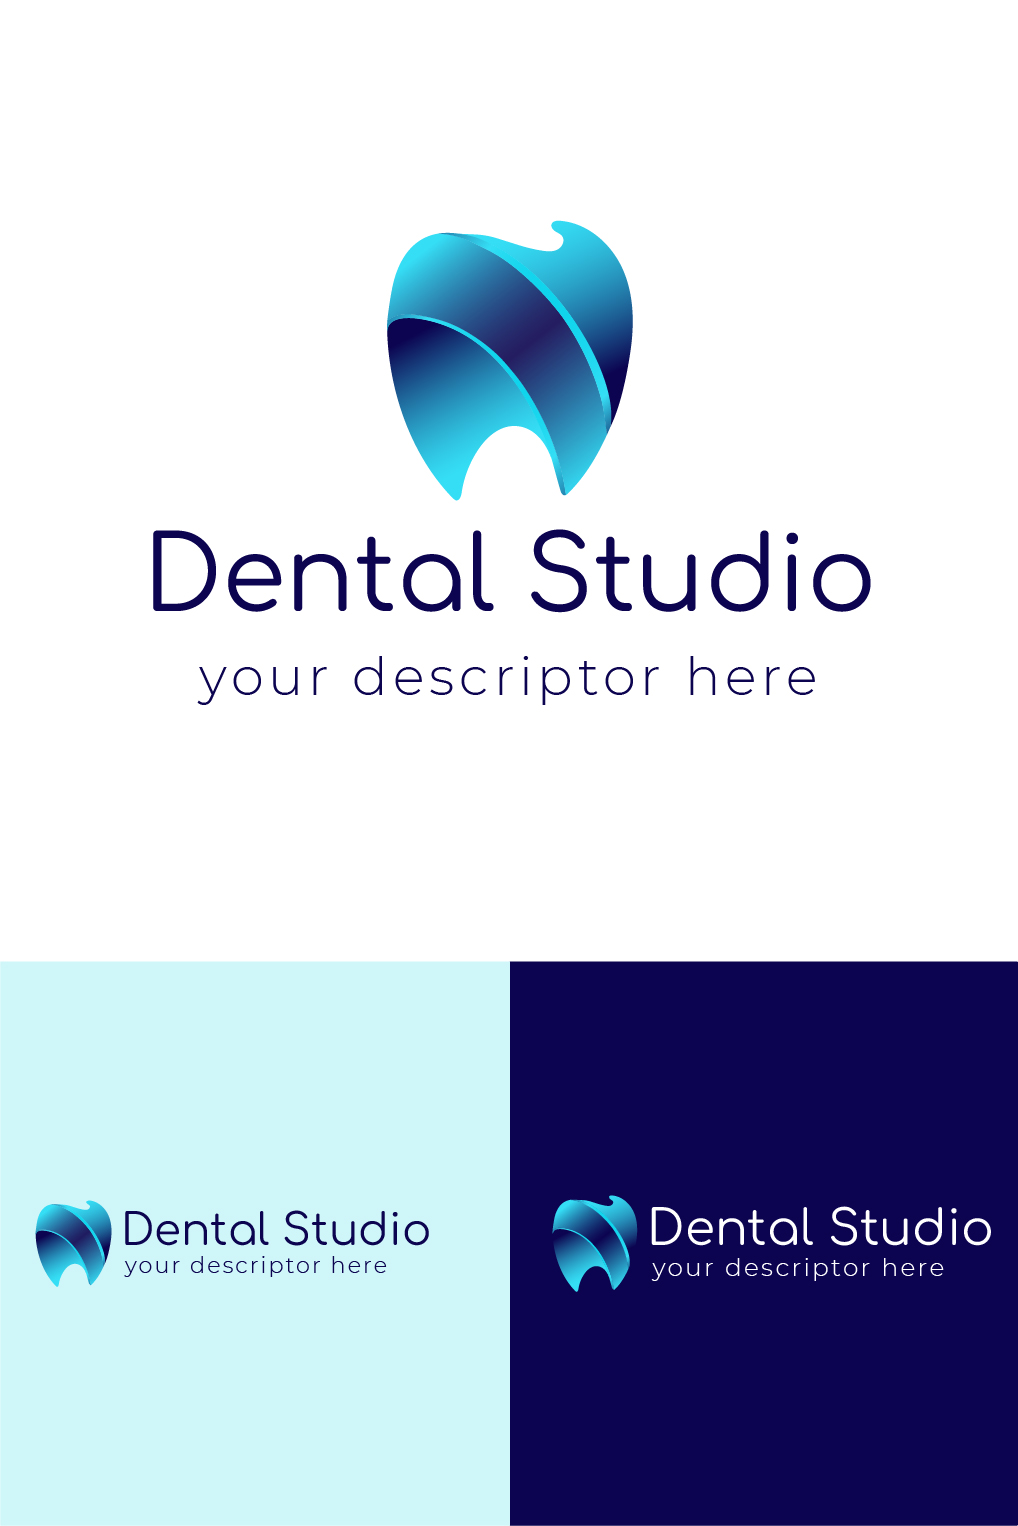 dental logo pinterest preview image.